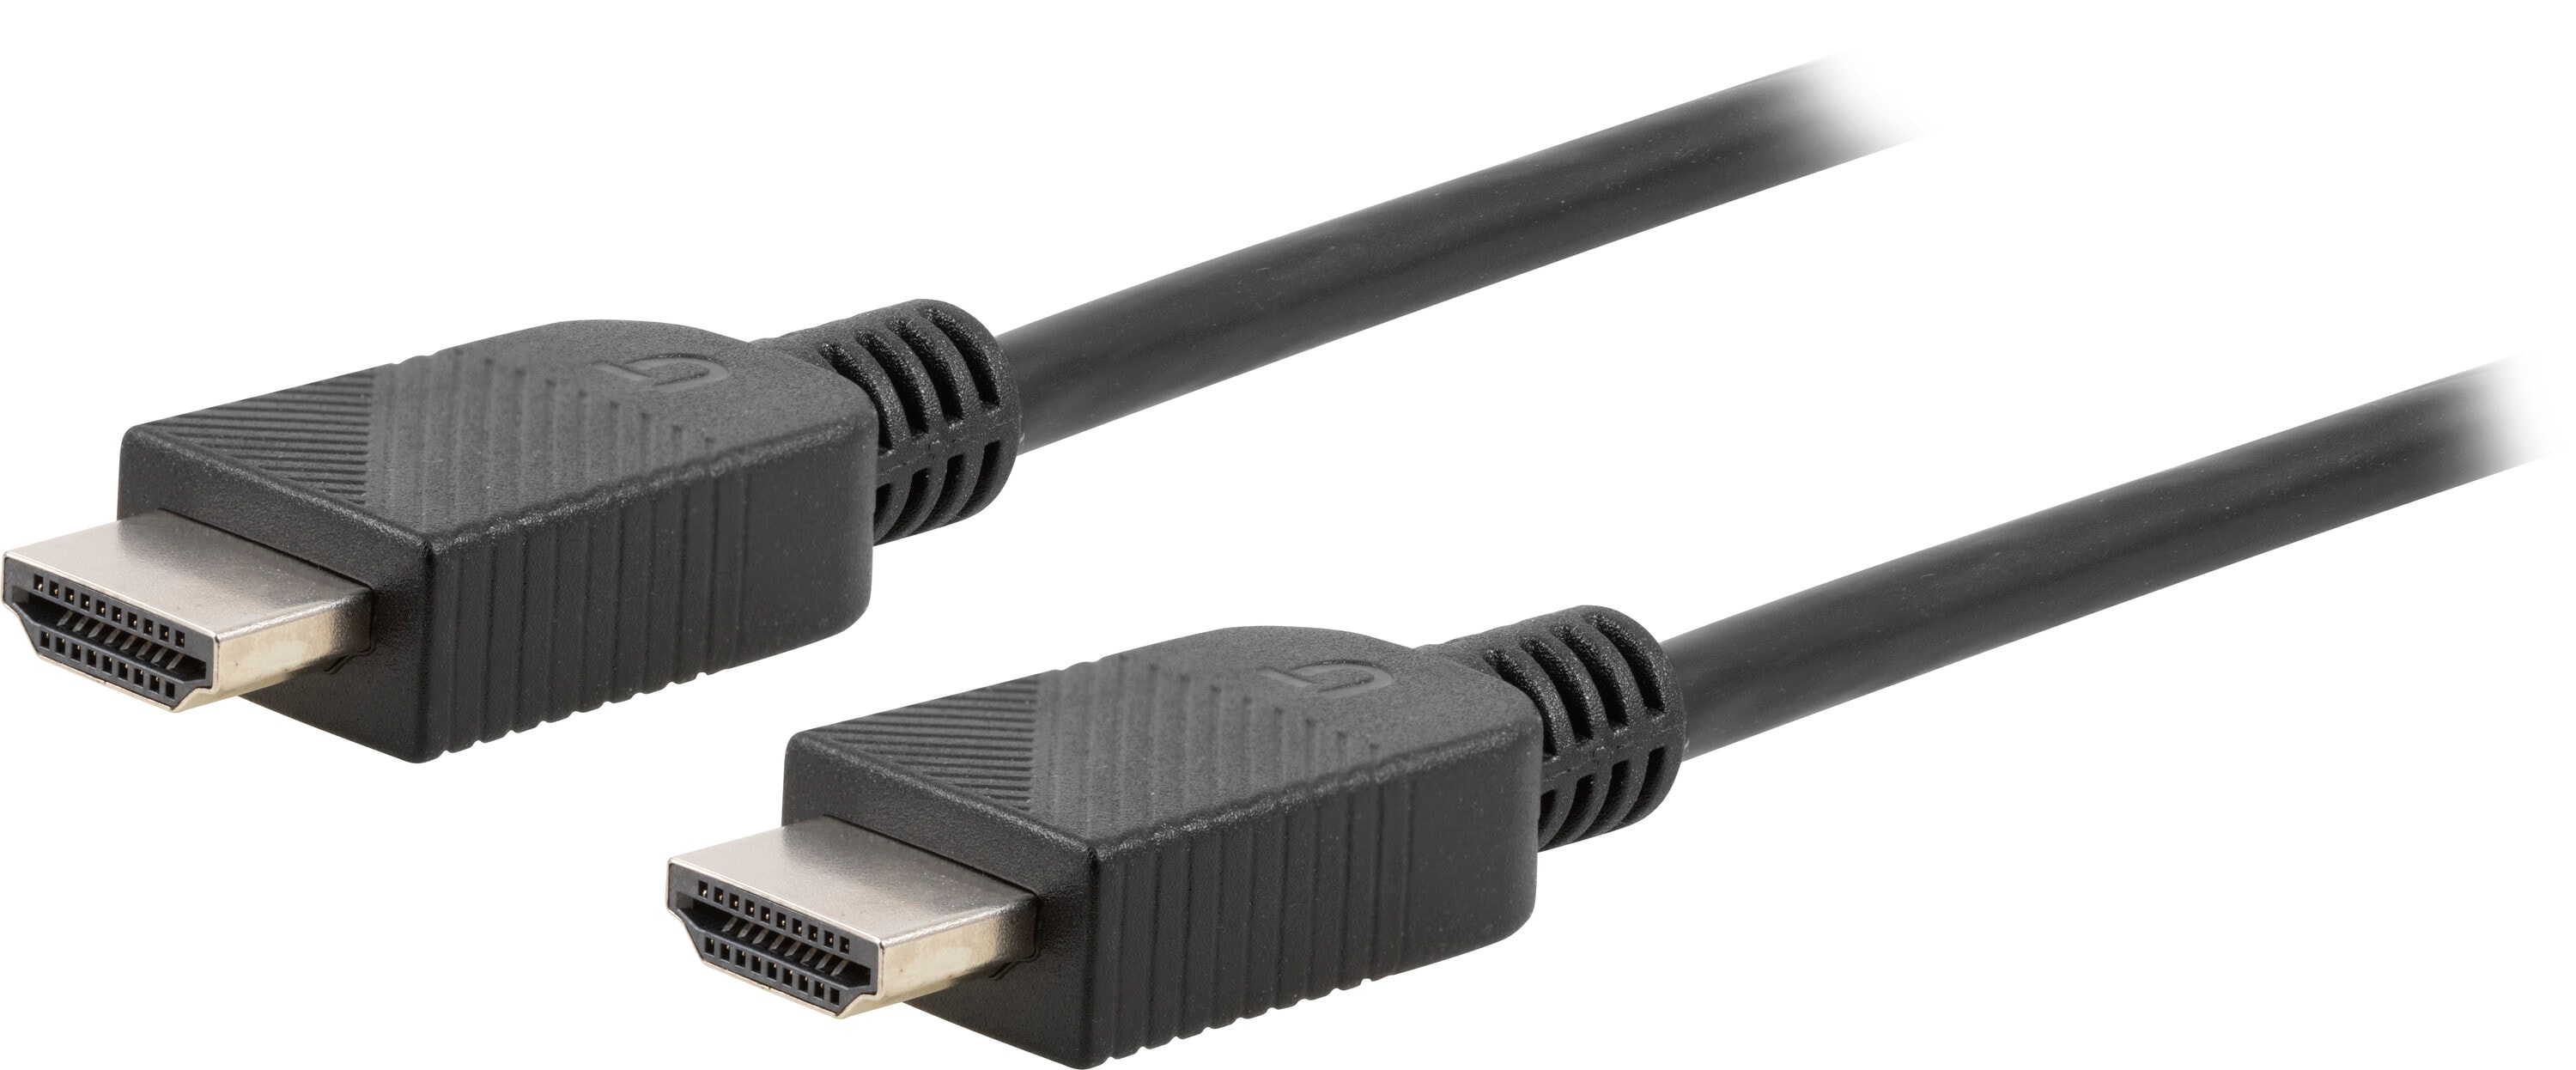 Comprar CABLE HDMI(A) A HDMI(A) 4K 1M NANOCABLE NEGRO online en Dalion Store